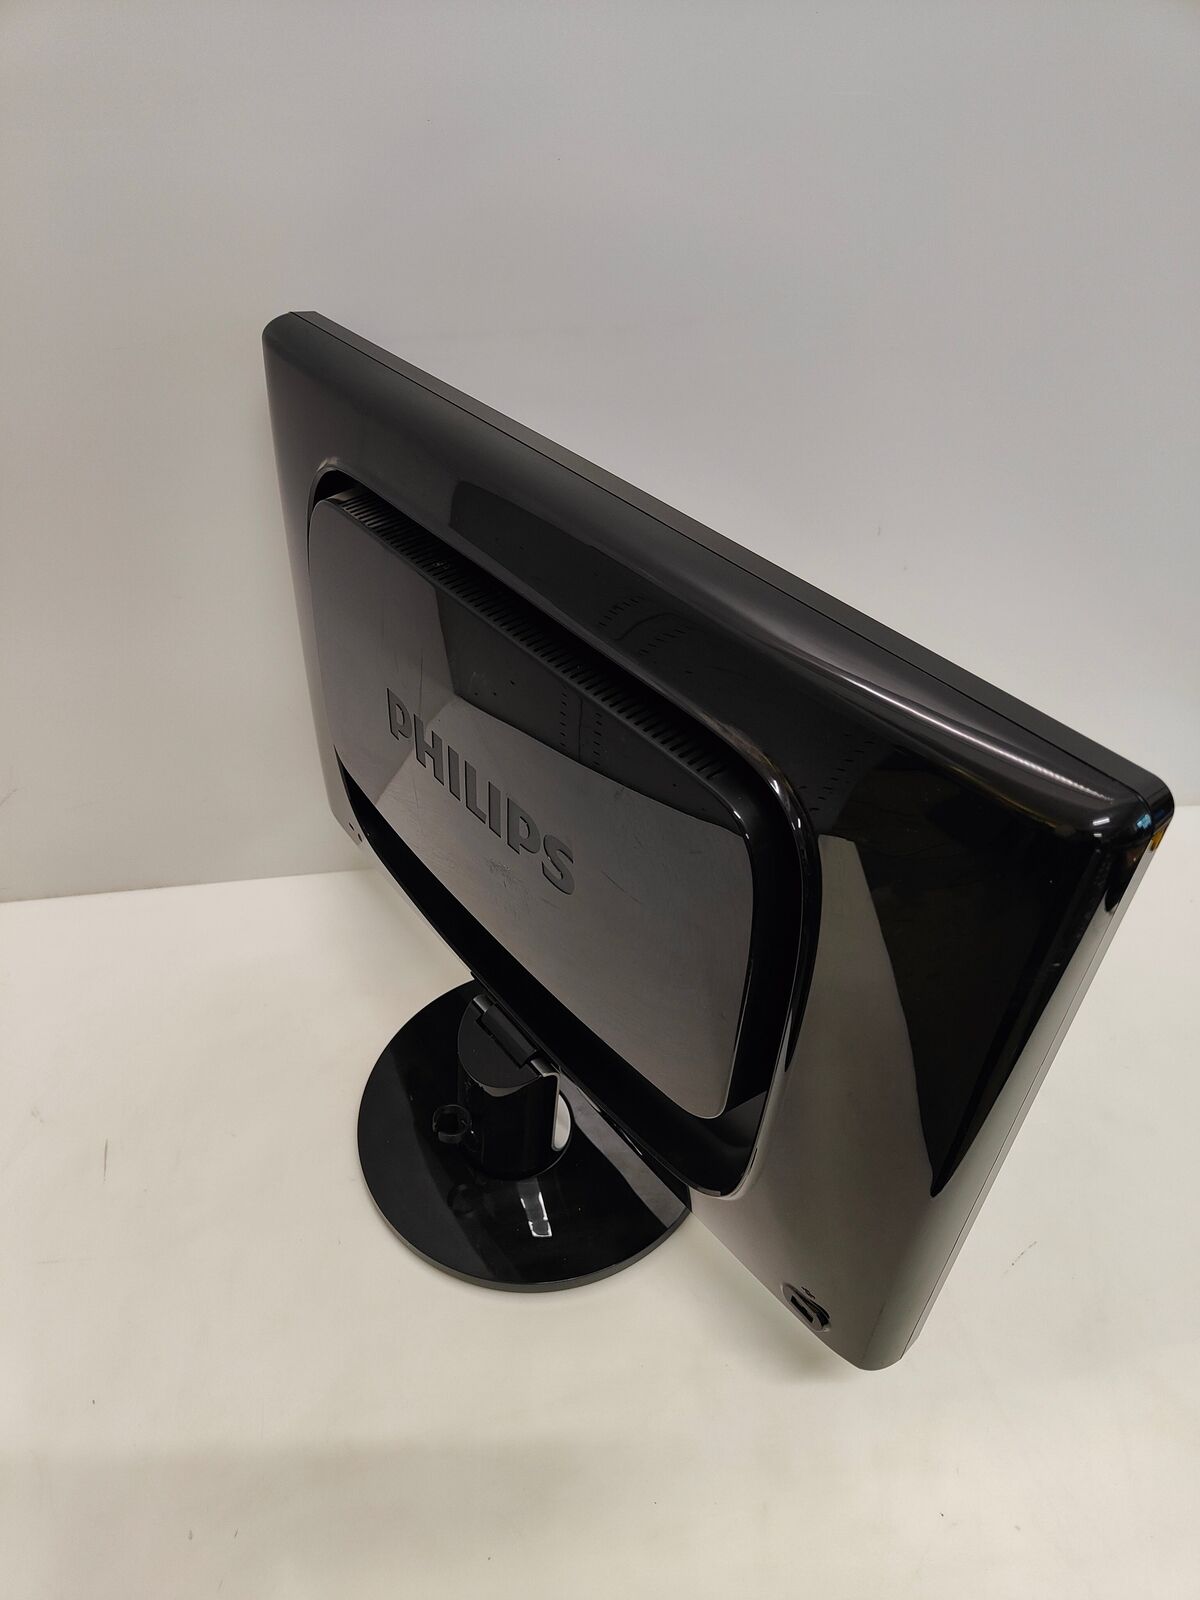 Philips 220CW9 HWC9220i widescreen monitor